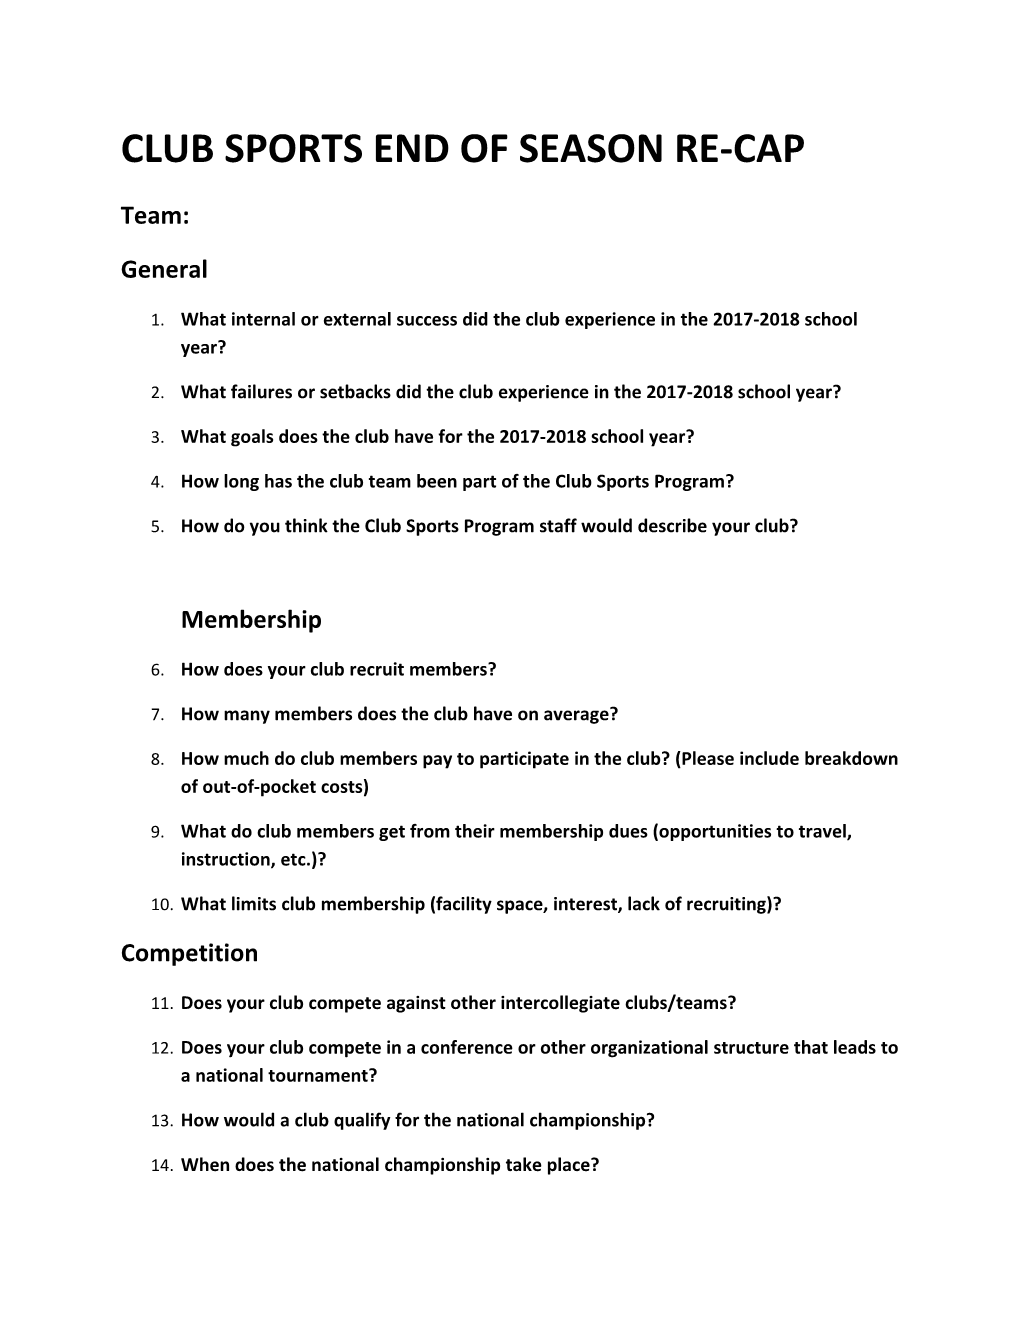 Club Sports End of Season Re-Cap